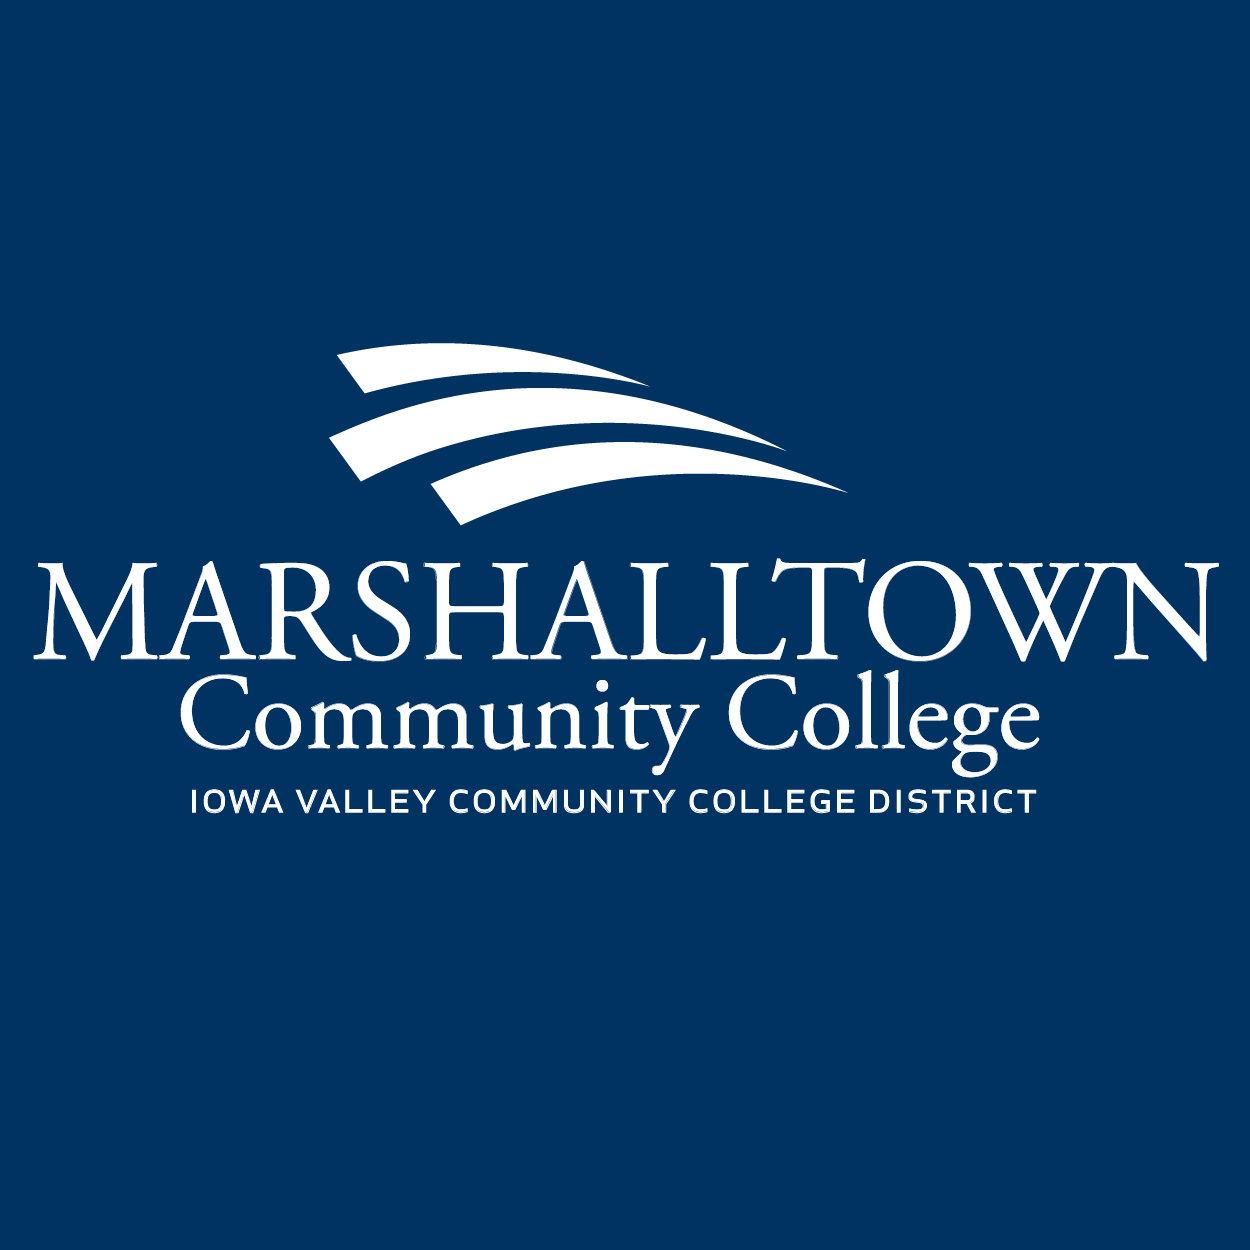 Marshalltown Community College